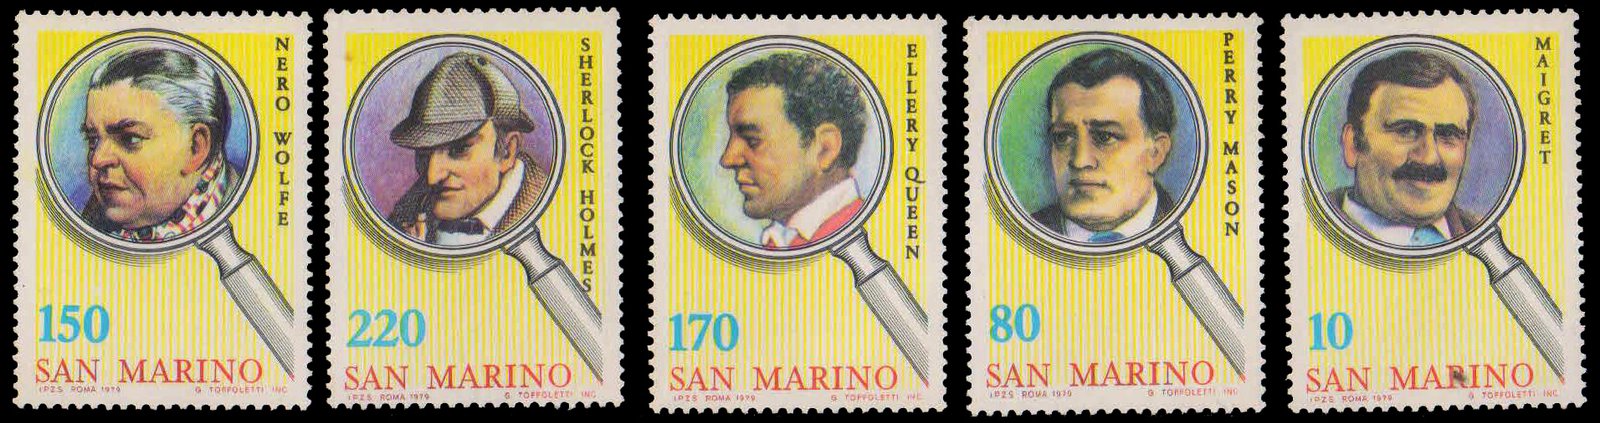 SANMARINO 1979-Fictional Detectives, Set of 5, MNH, S.G. 1108-112